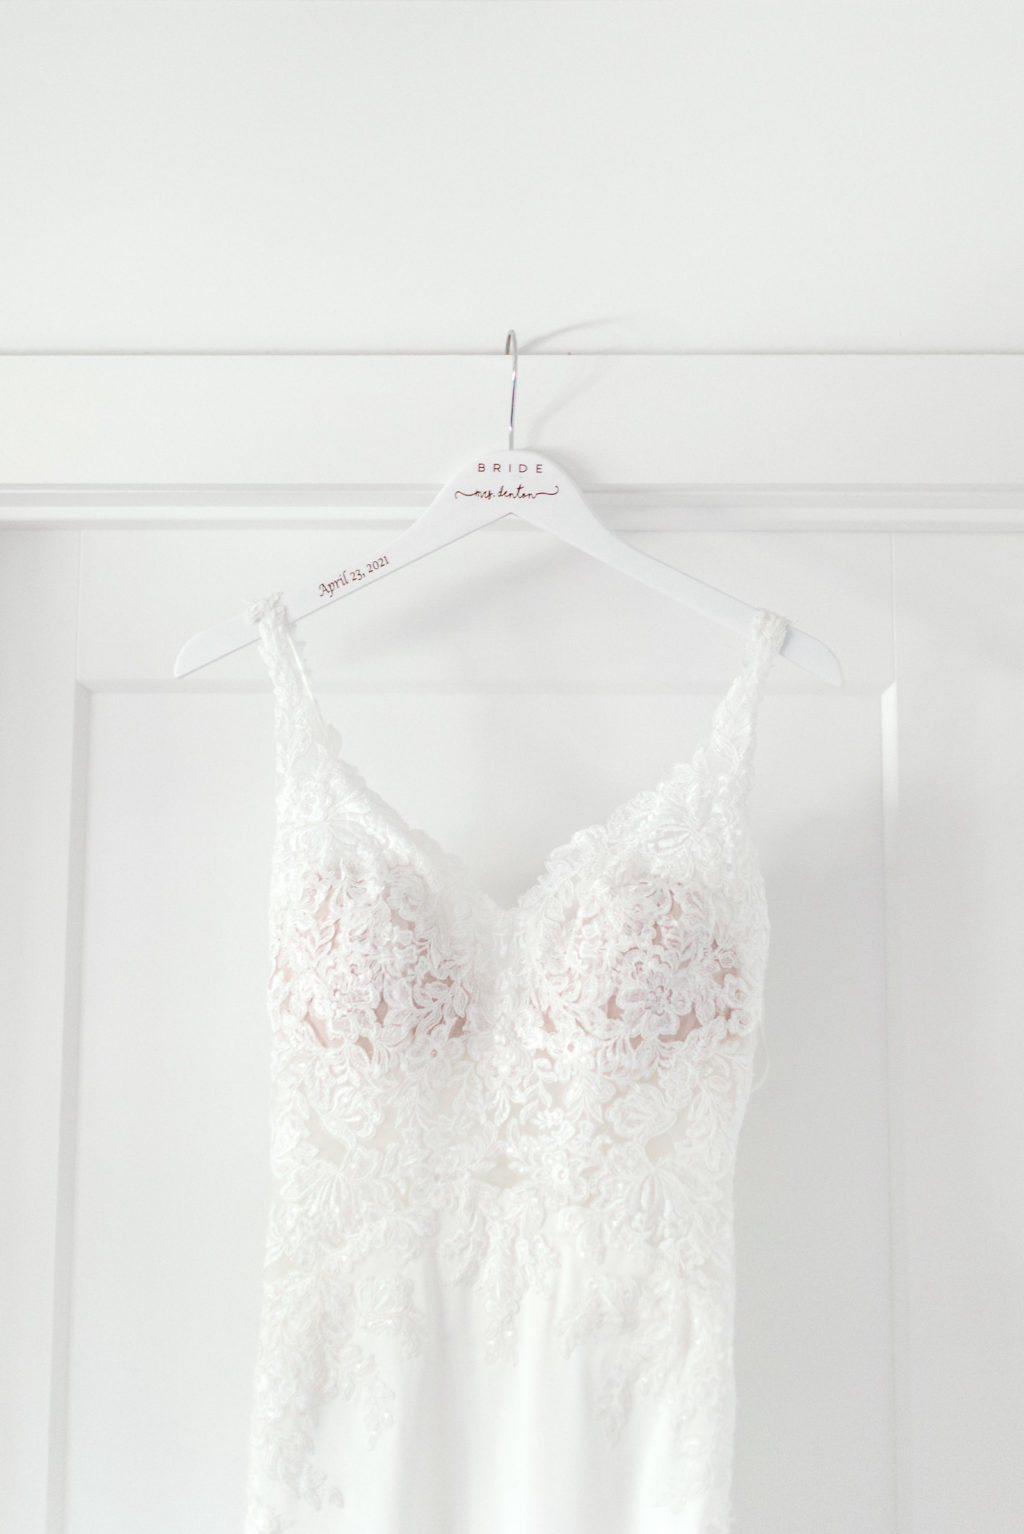 Lace Illusion Wedding Dress Bodice | Morilee Spaghetti Strap Fit and Flare